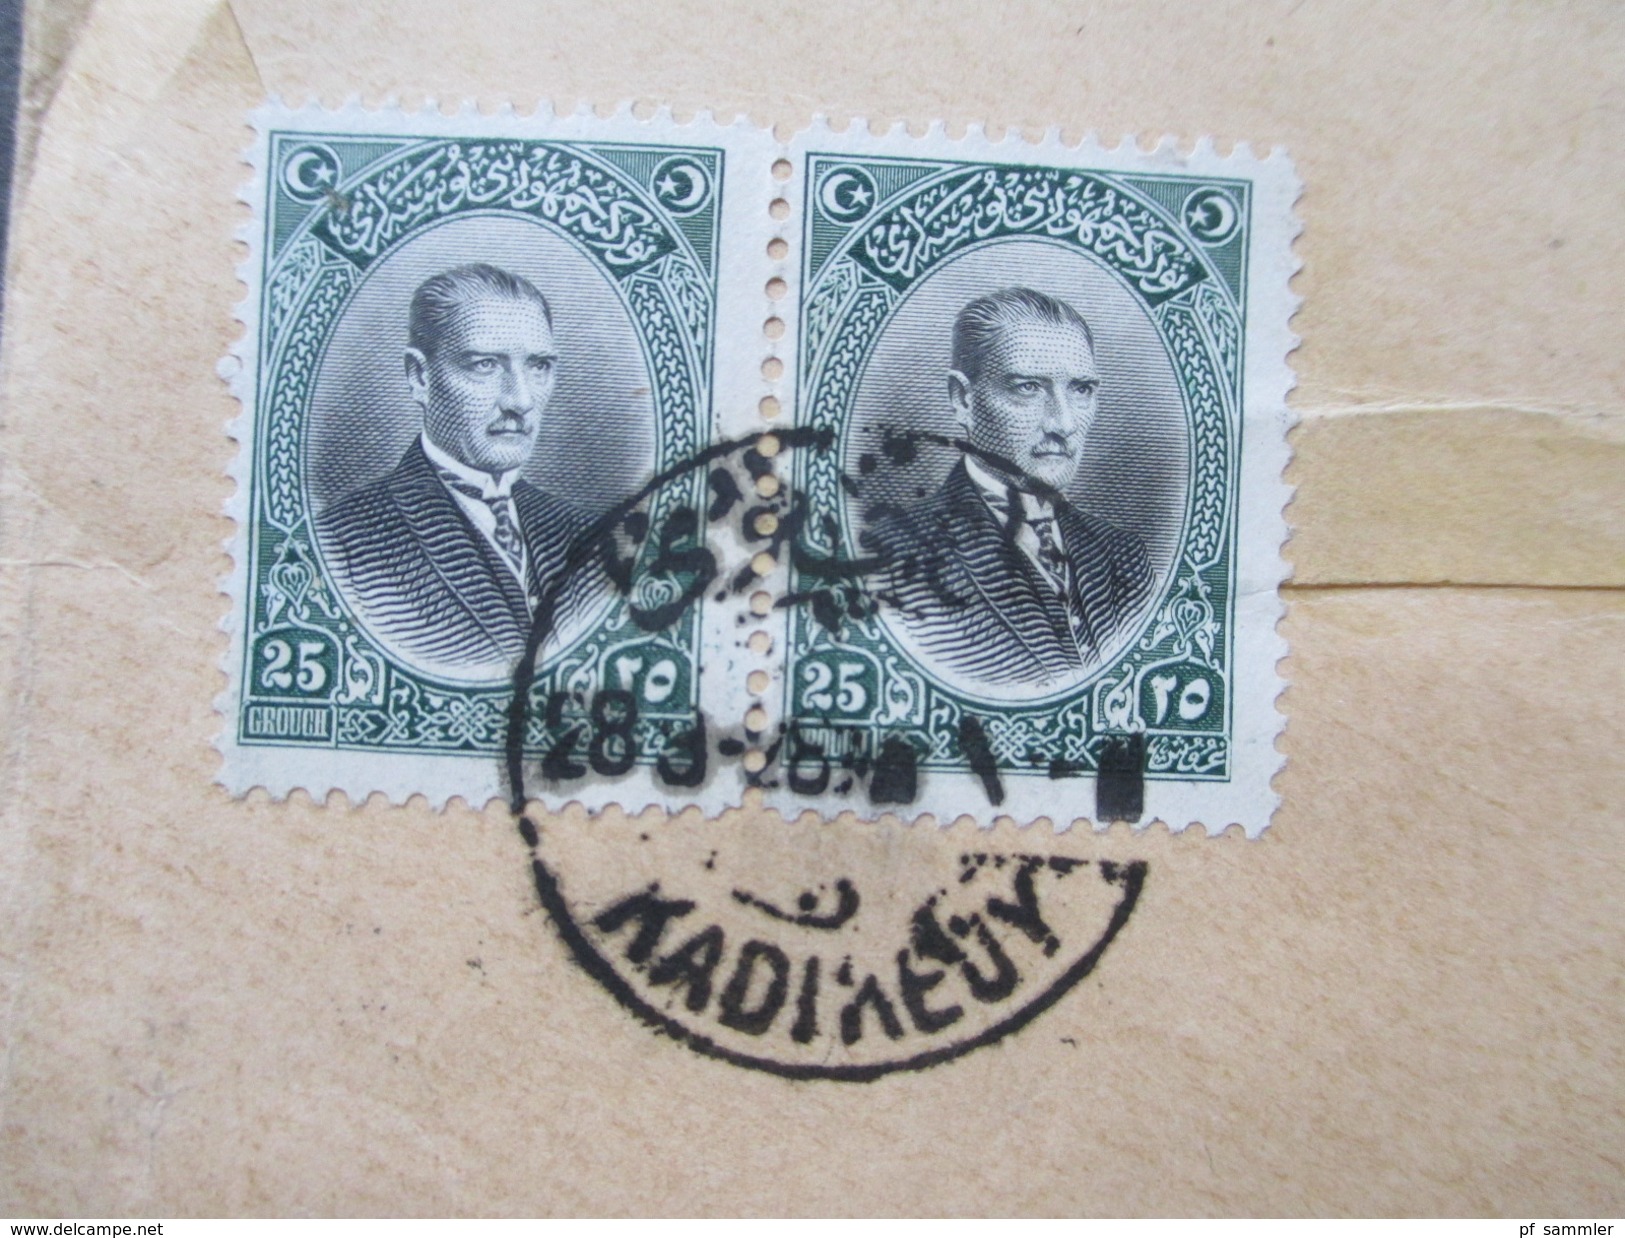 Türkei 1928 R-Brief R-Zettel St. Kadikeuy 515 / Kadikoy! Nr. 875 Smyrna Aufdruck MiF. RRR?!? nach Wien!